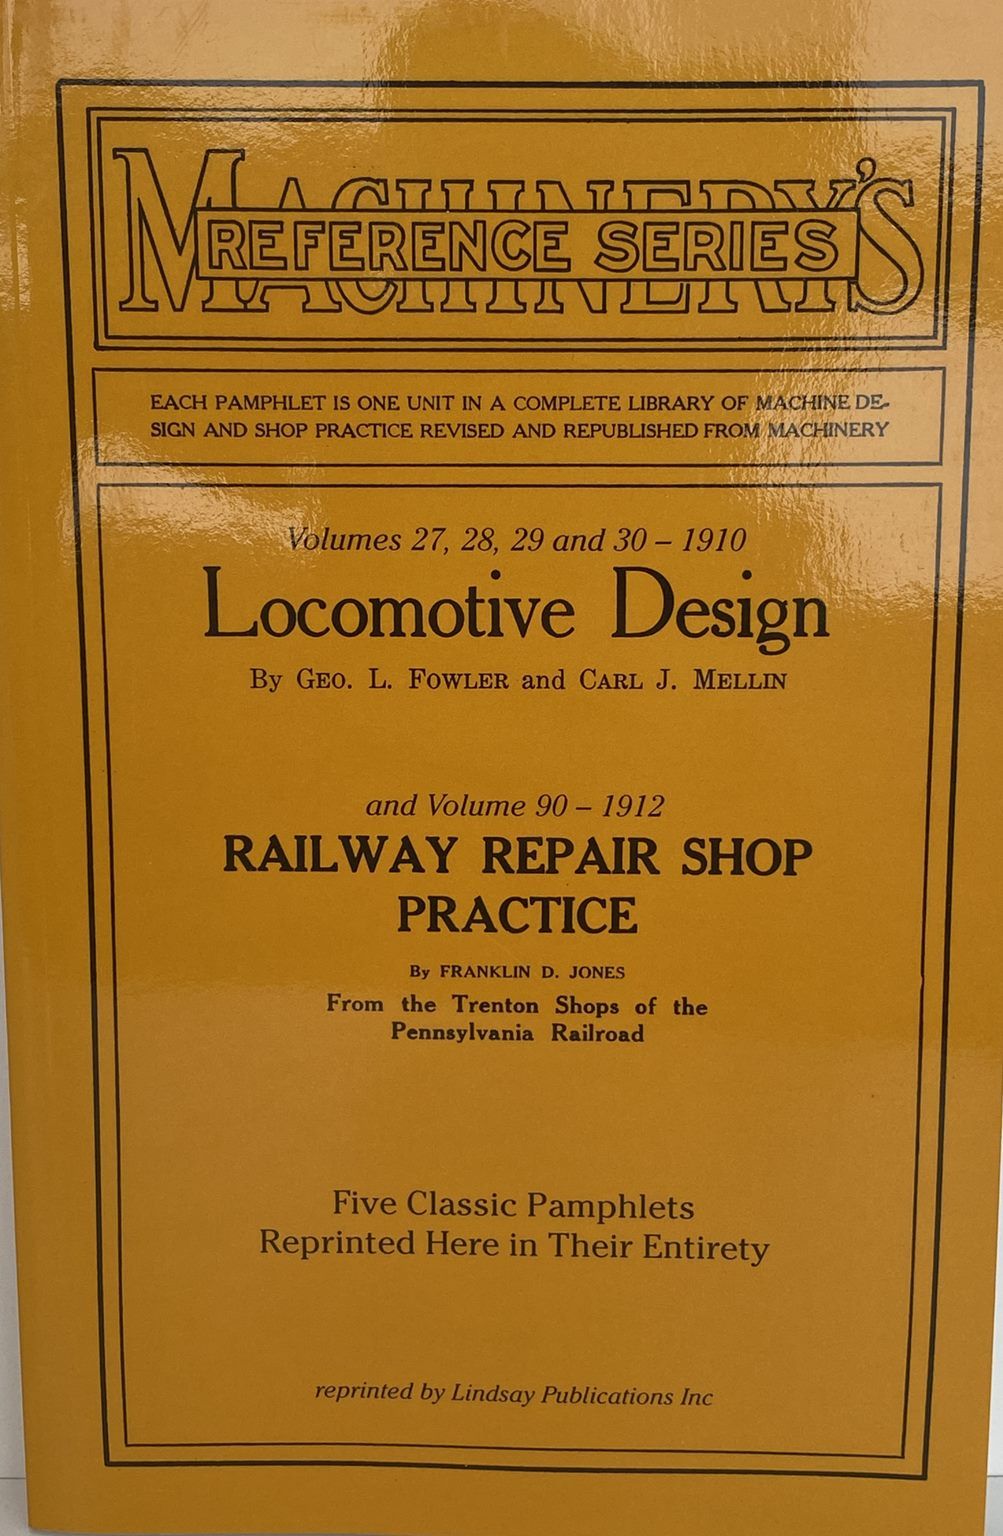 Locomotive Design & Railway Repair Shop Practice